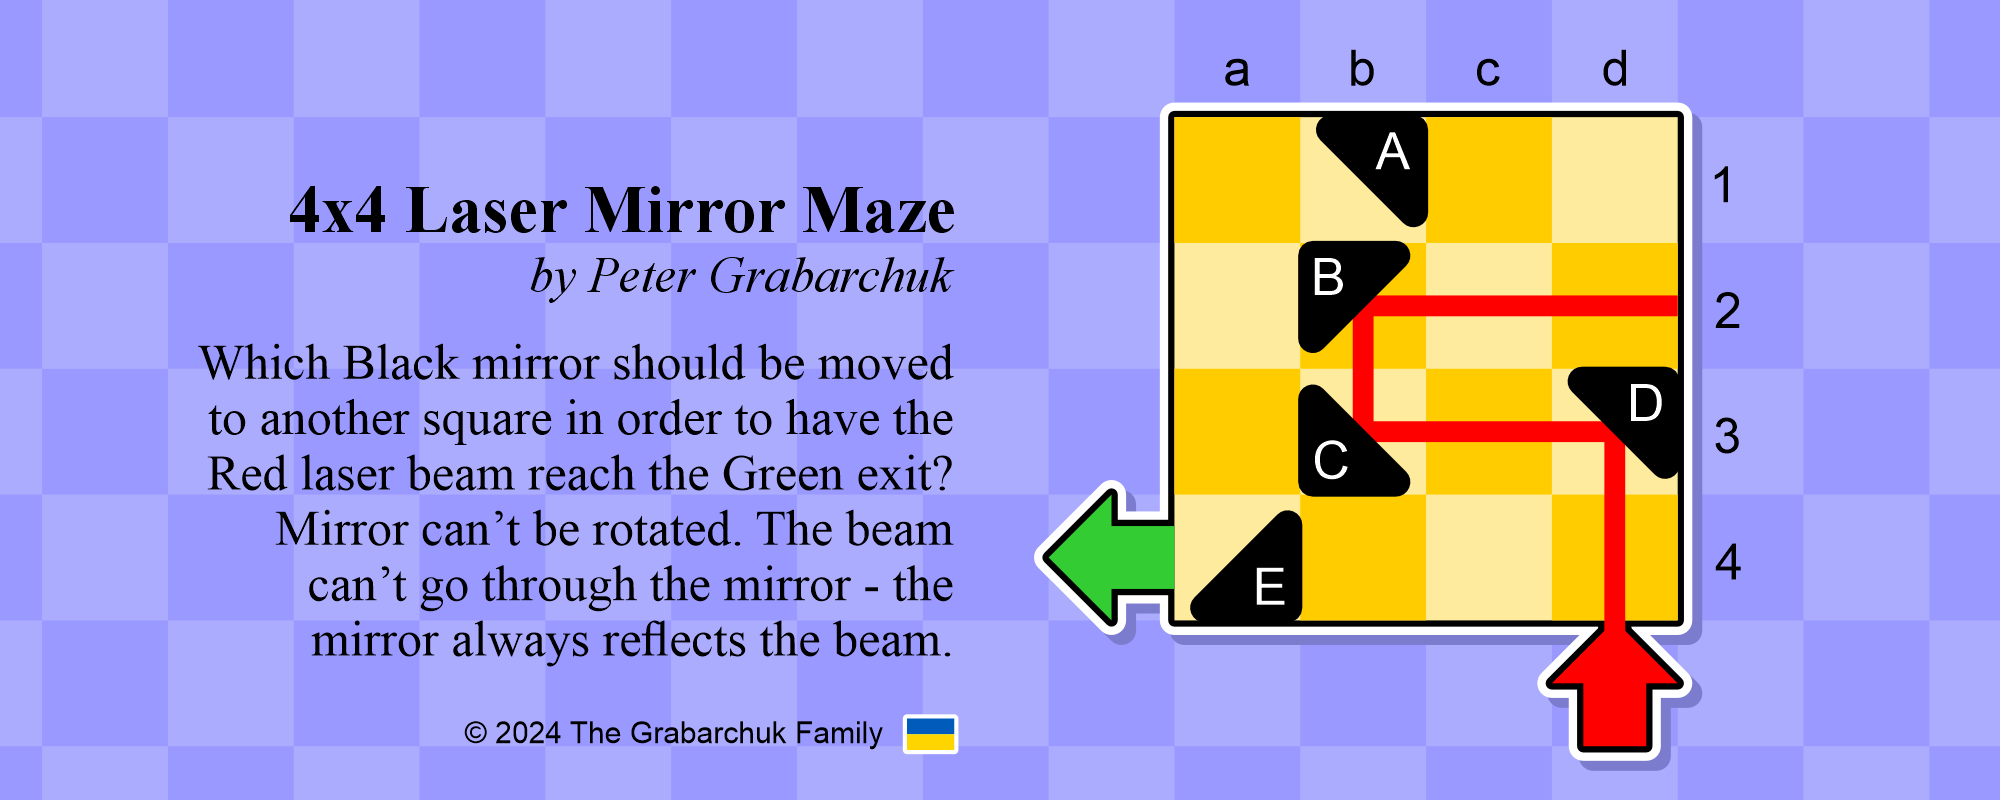 4x4 Laser Mirror Maze by Peter Grabarchuk